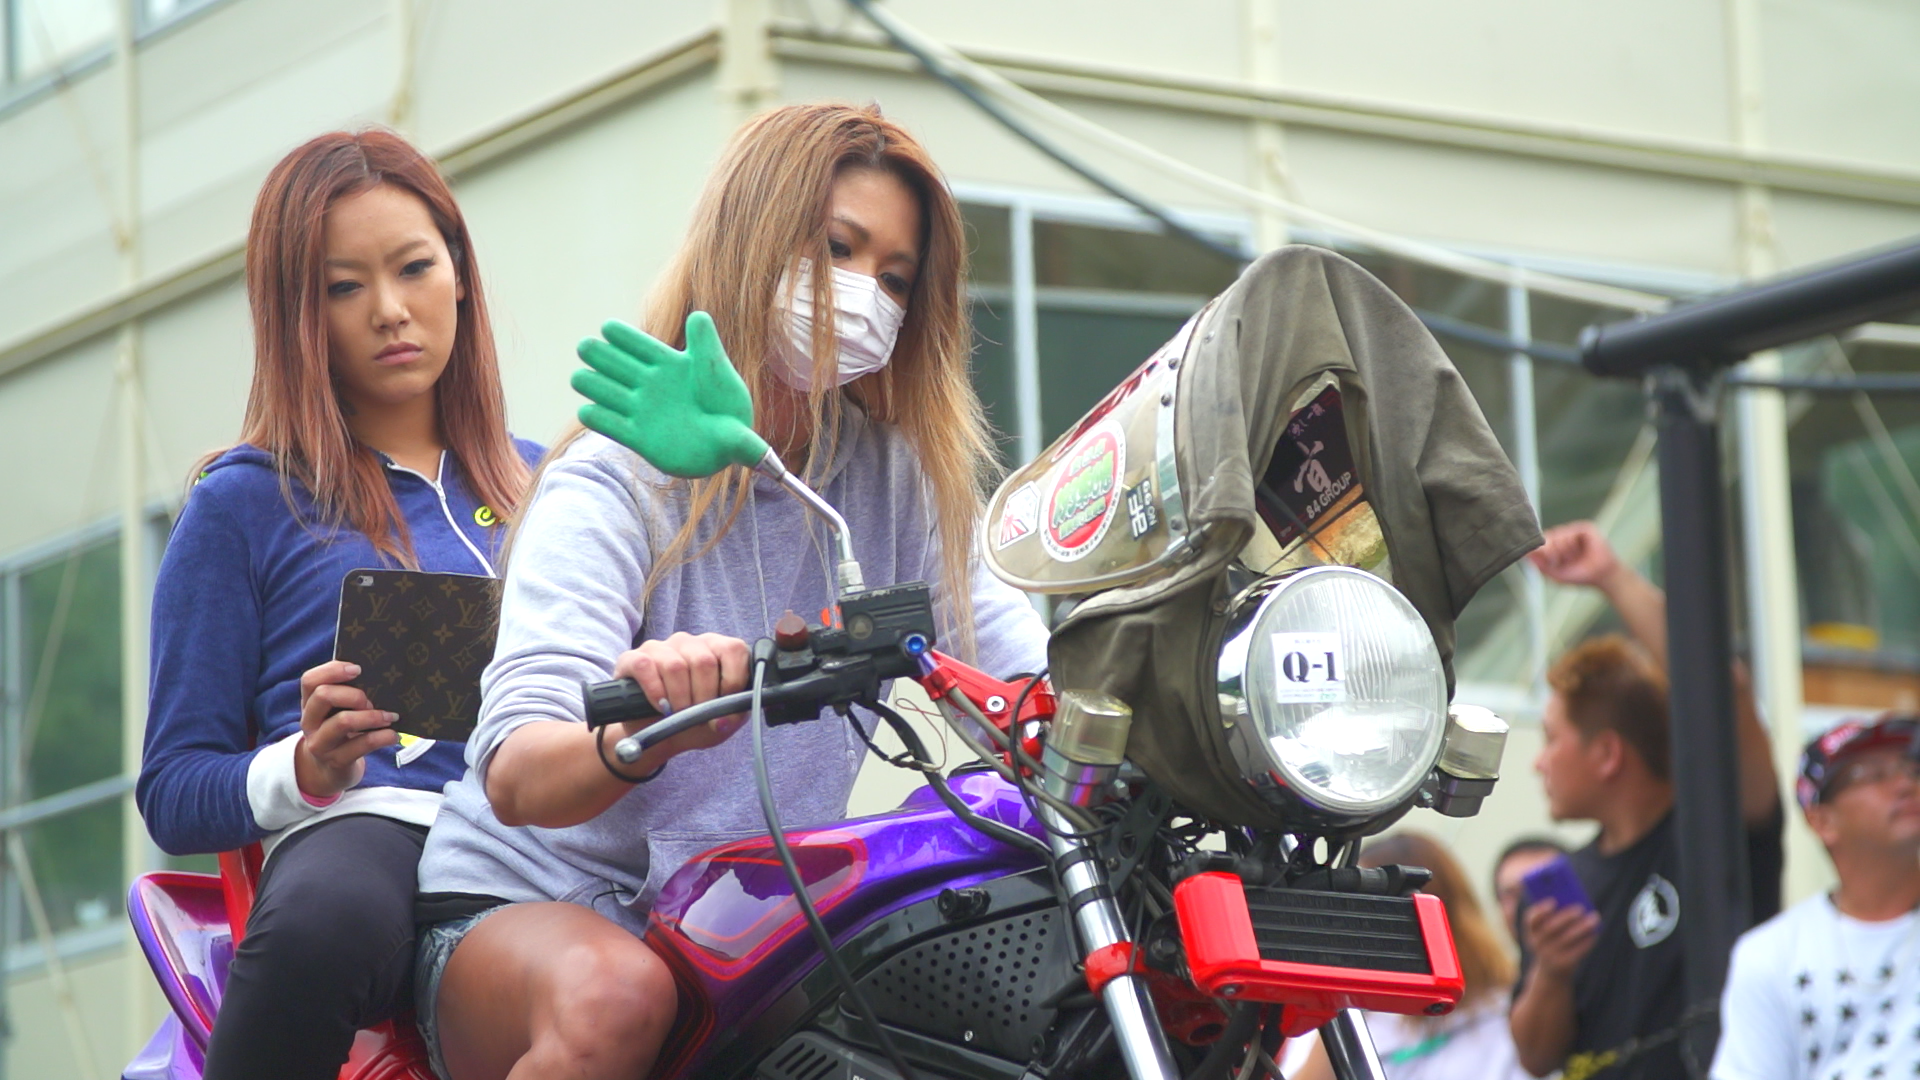 Q 1 Grand Prix Ep03 旧車の祭典でコール最強を目指すバイク女子 Vice Video Documentaries Films News Videos